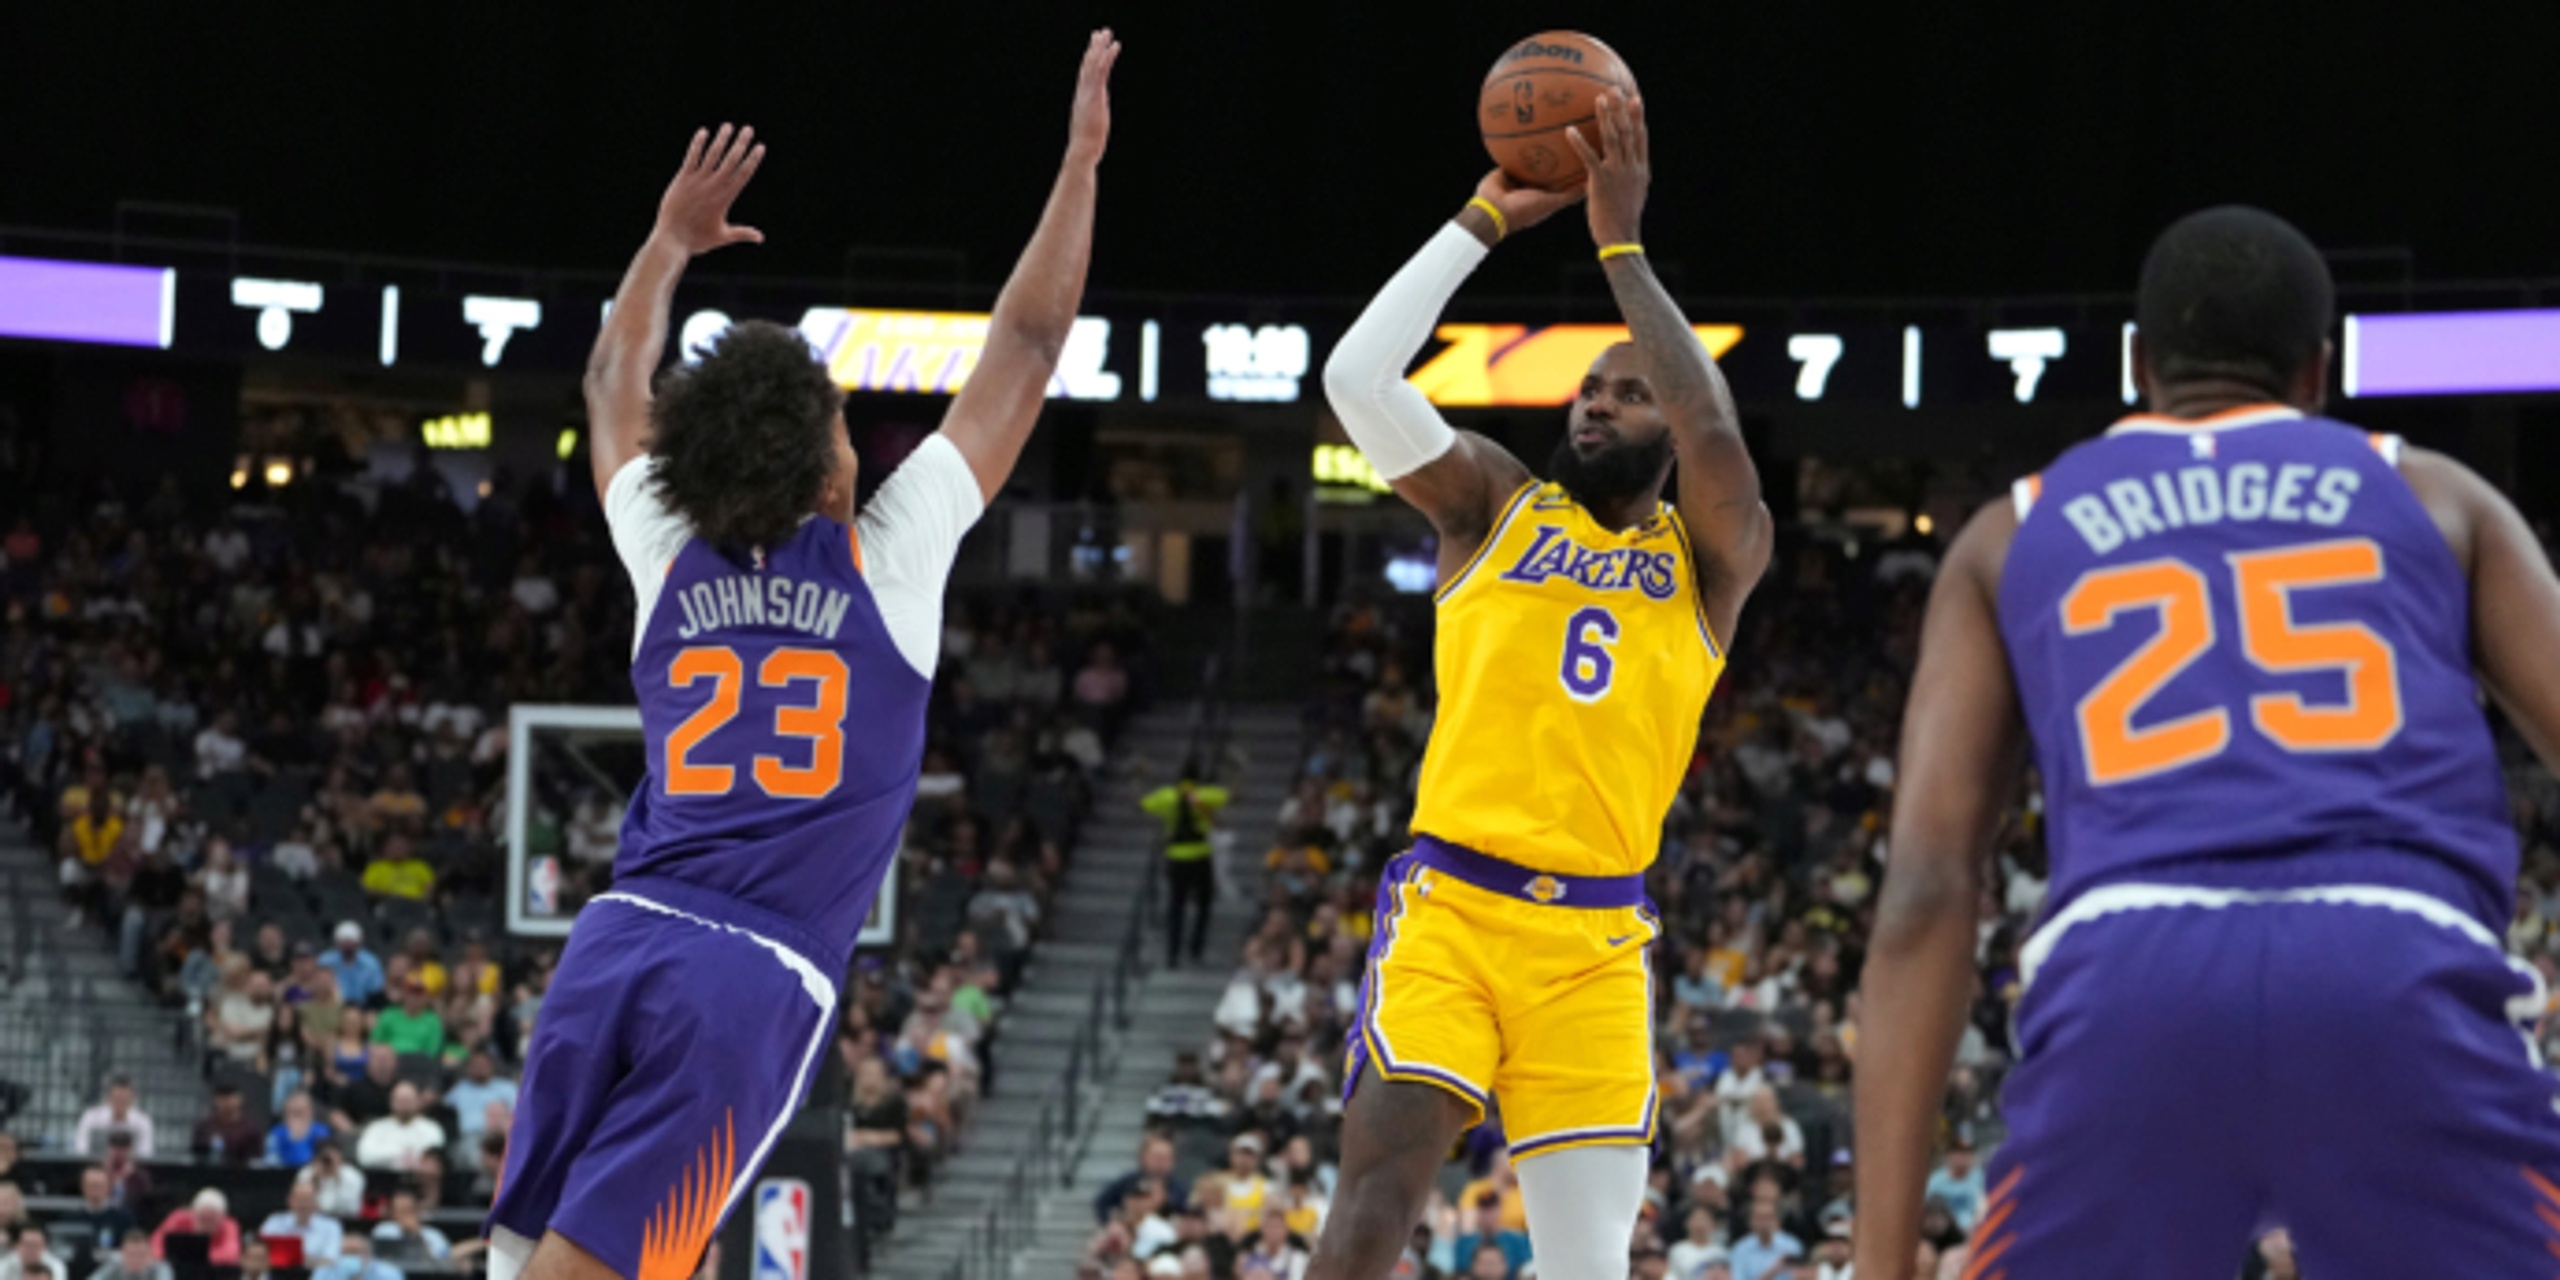 LeBron scores 23 points, but not enough as Suns defeat Lakers